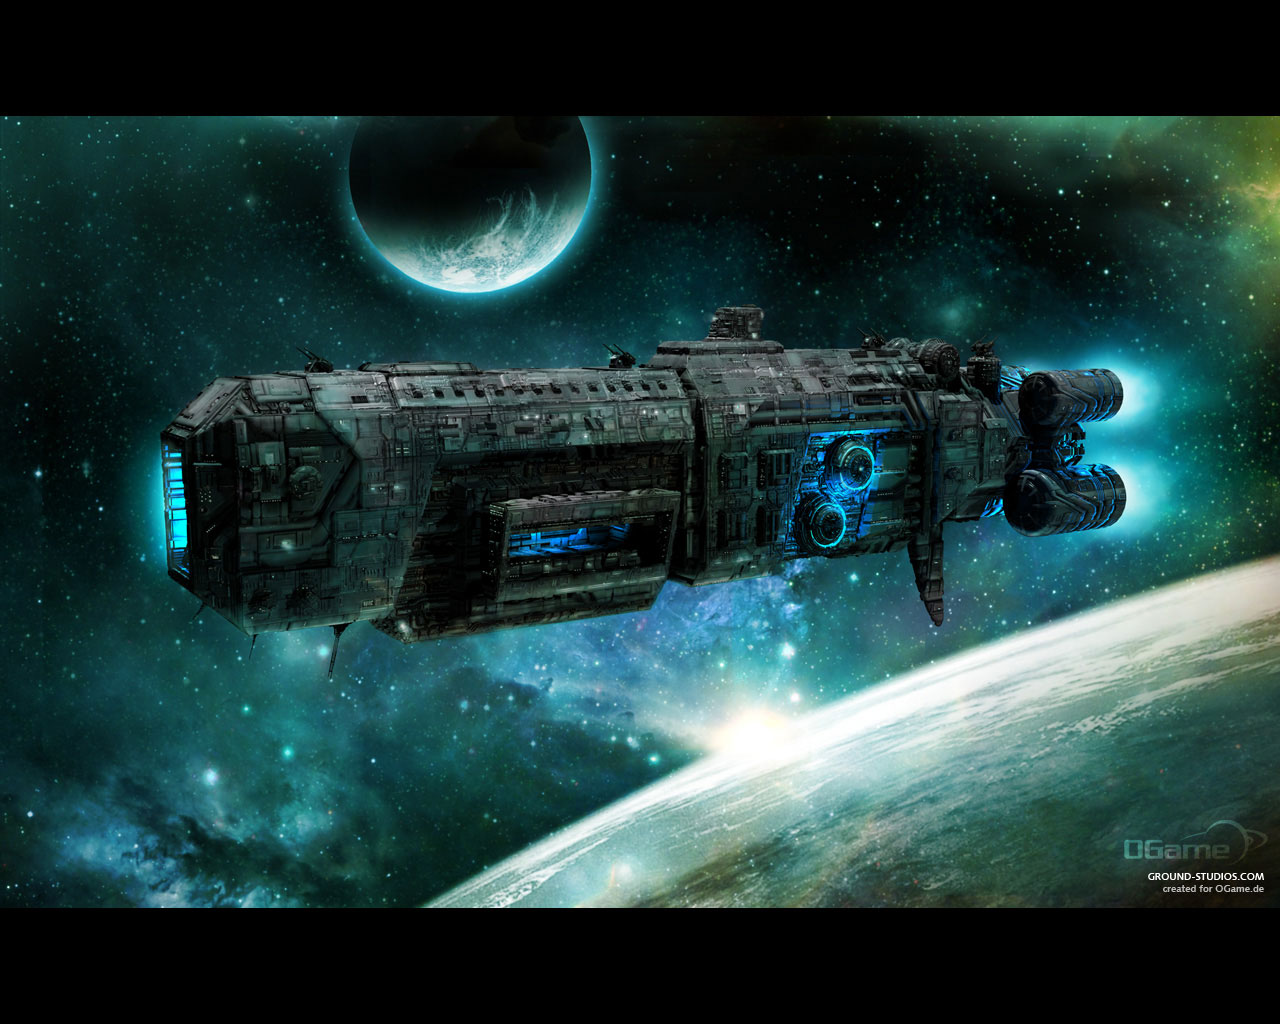 bilim-kurgu-uzay-gemisi-resmi-science-fiction-spaceship-picture.jpg